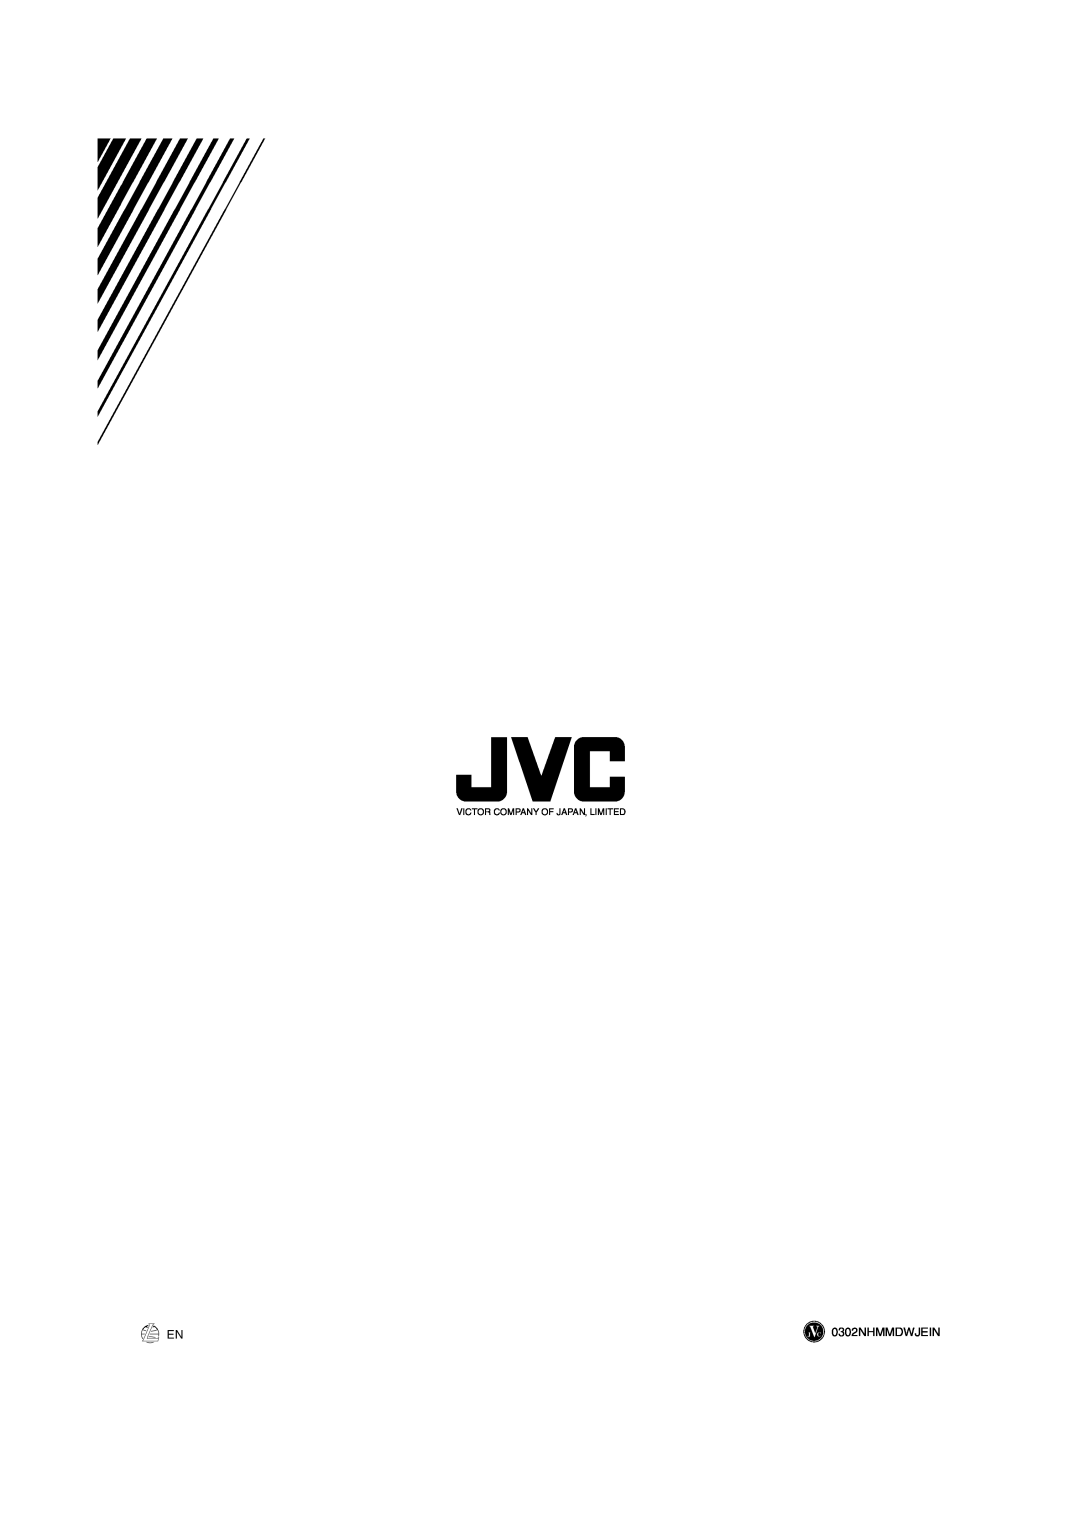 JVC RX-6022VSL manual 0302NHMMDWJEIN, Victor Company Of Japan, Limited 